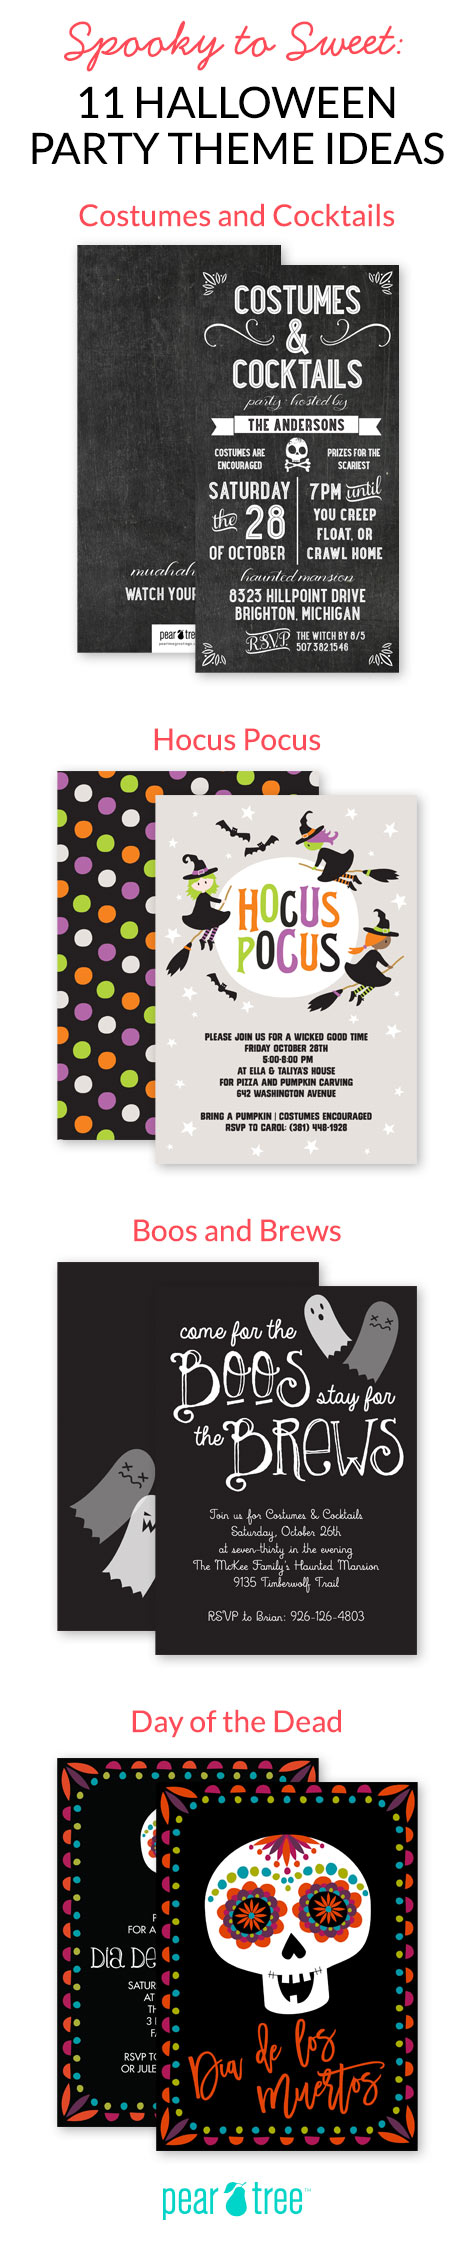 Spooky to Sweet: 11 Fun Halloween Party Theme Ideas Image